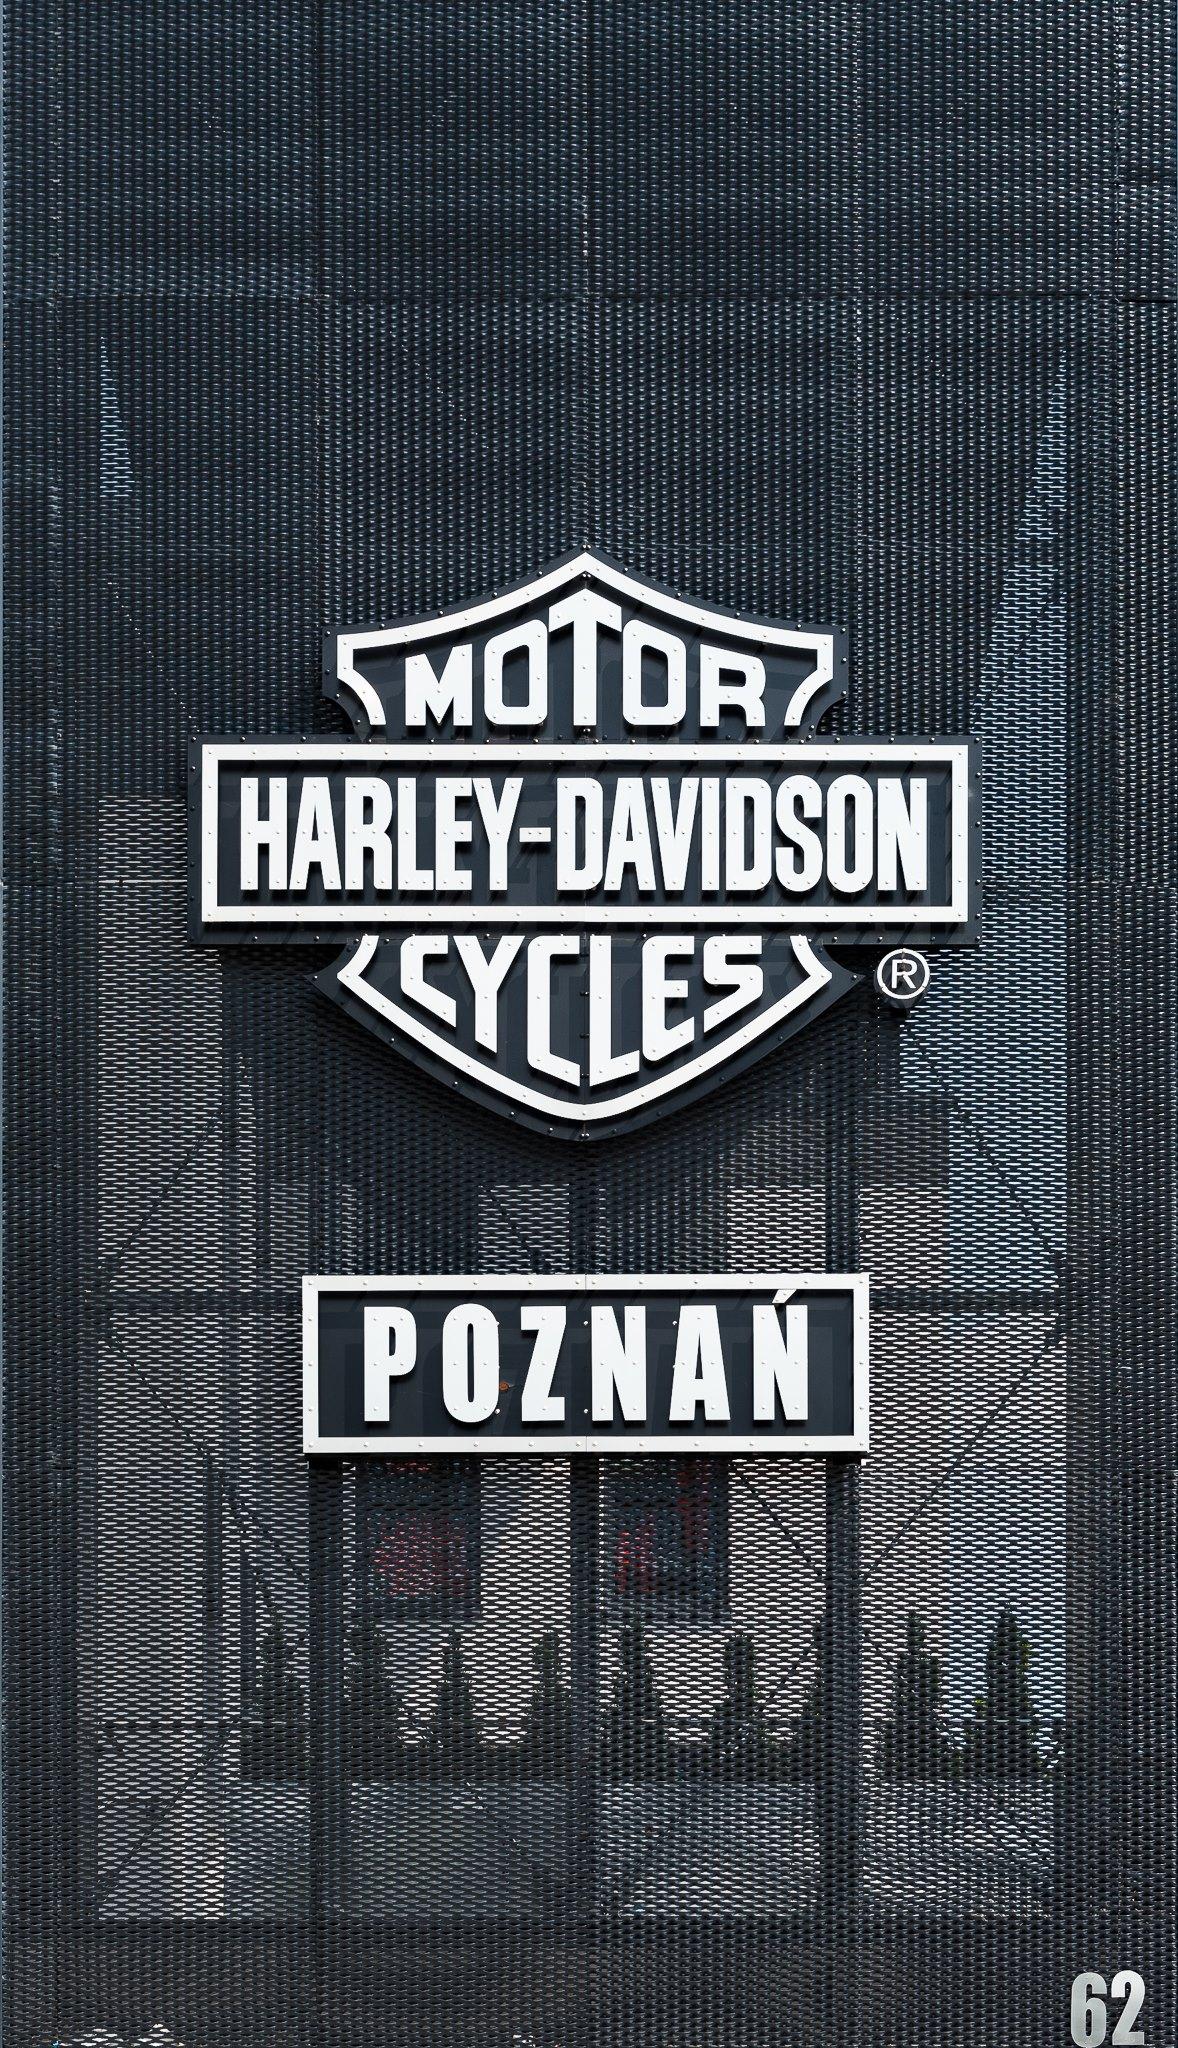  Harley Davidson Q2 STUDIO